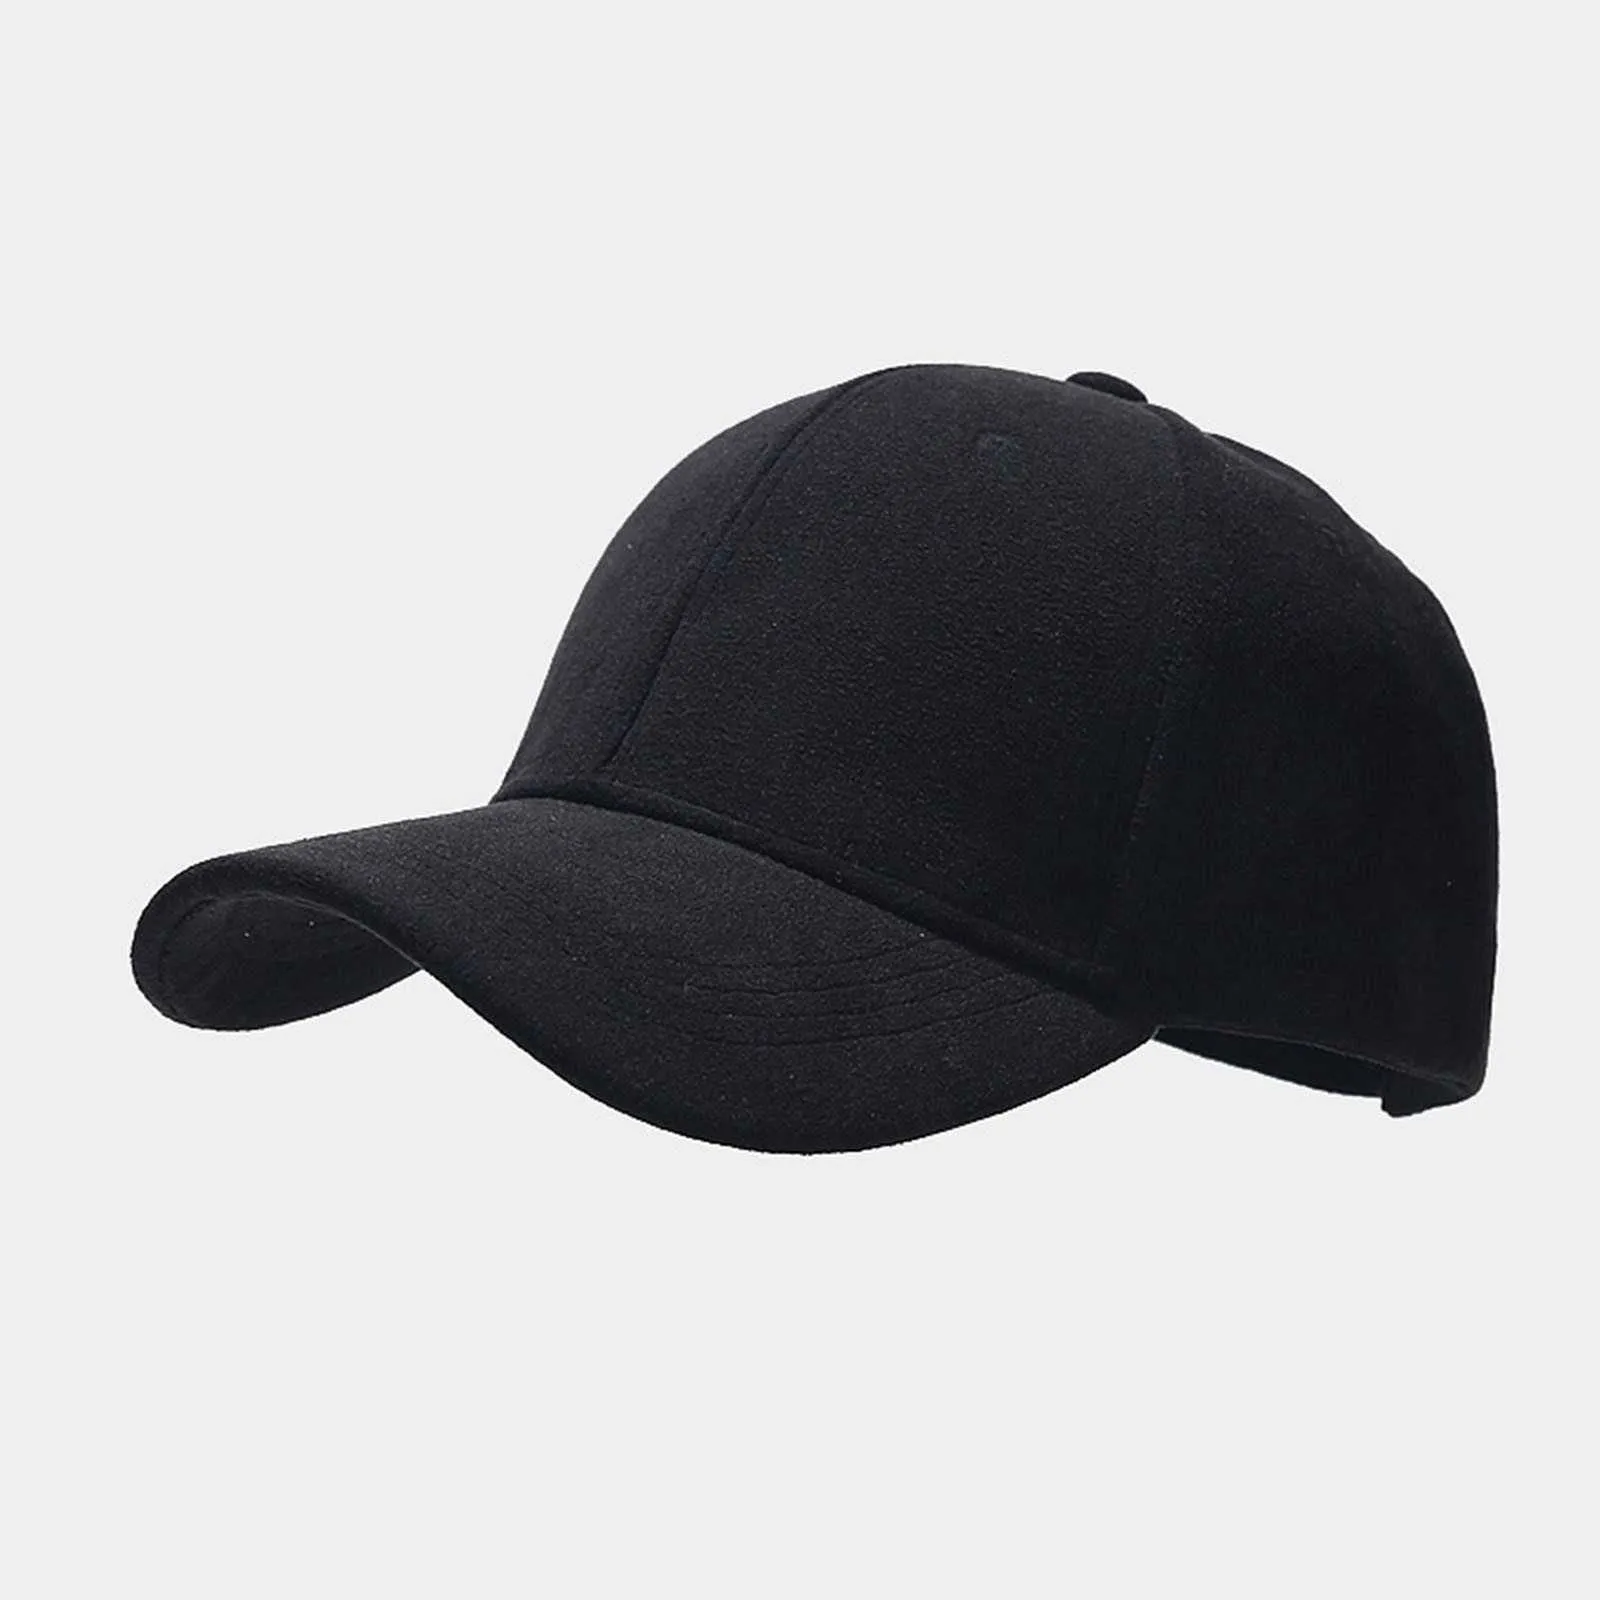 Adjustable Low Profile Plain Black Cap For Men And Women Classic